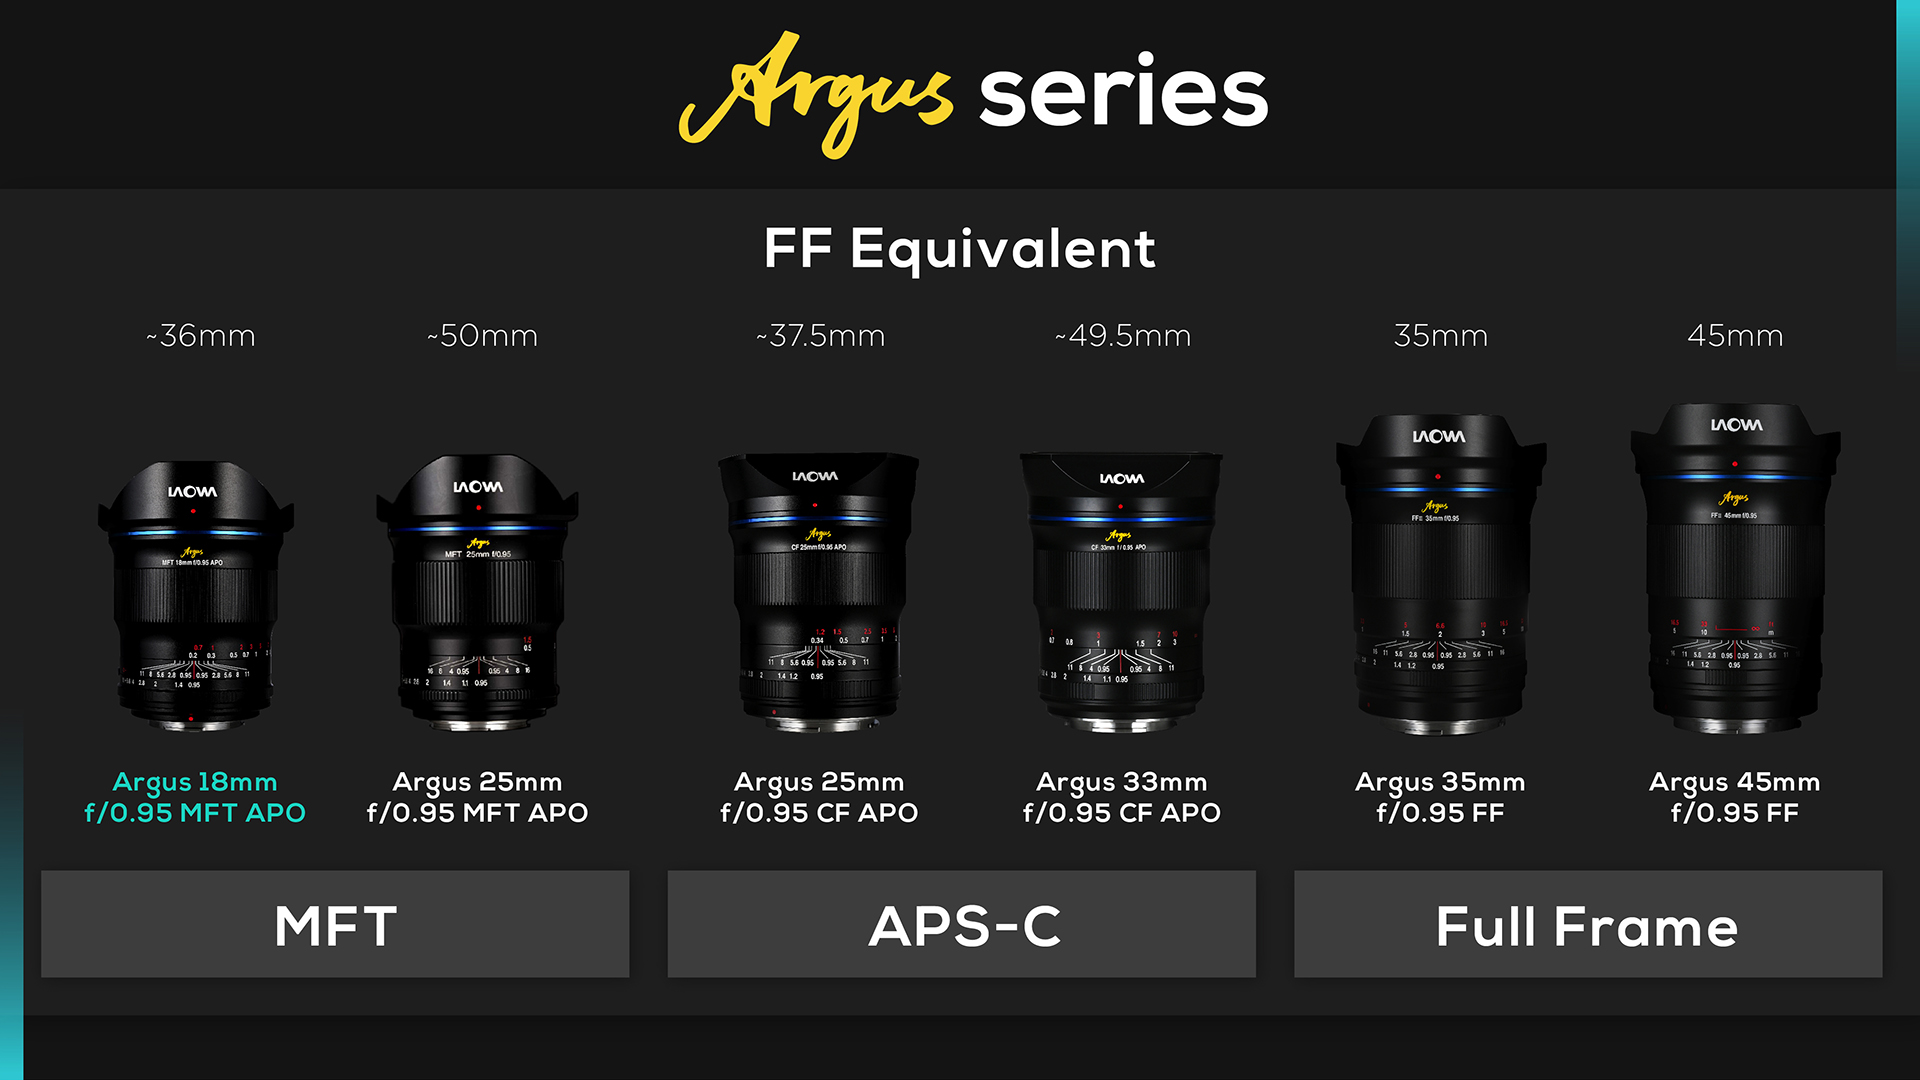 05_Argus 18mm MFT APO_Argus series line